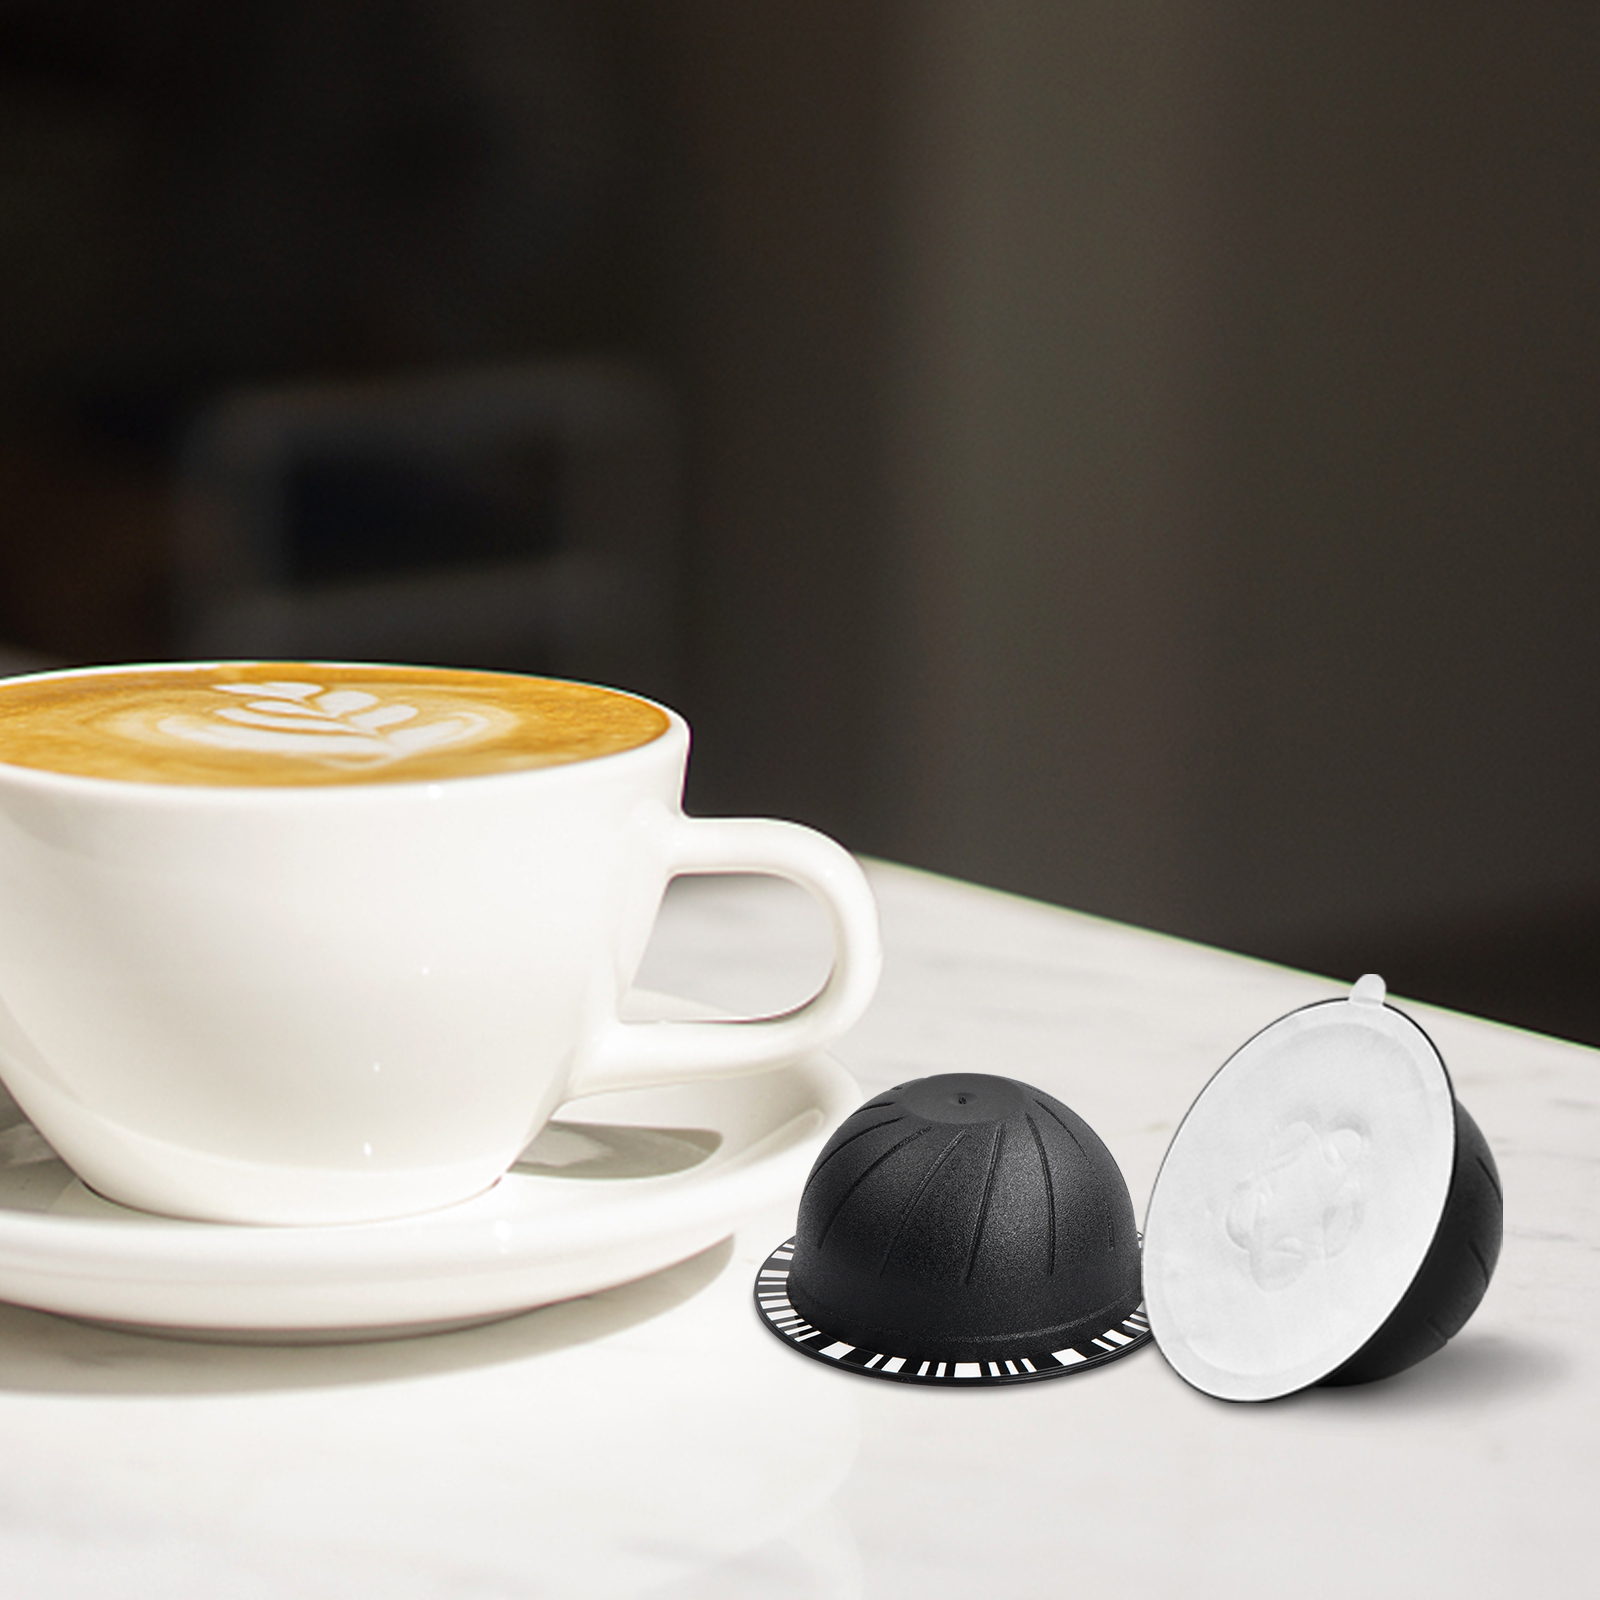 Coffee Capsule Cup Self Stick Tamper Kit For Nespresso Vertuo Bar  Accessories